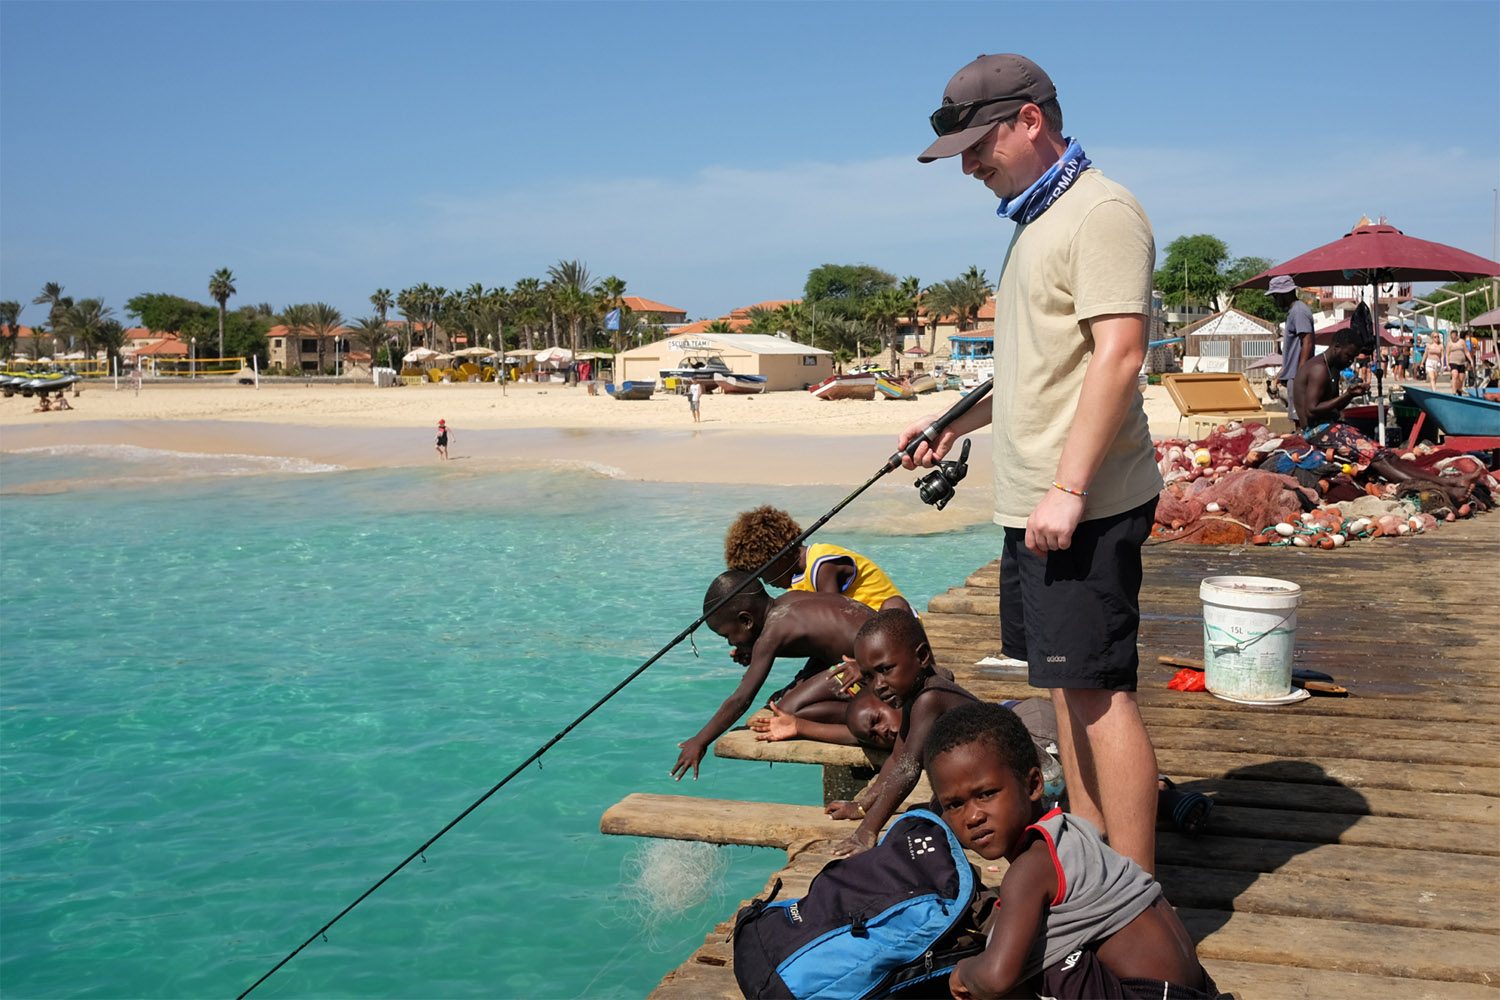 Gurgle lejr Dwell Hajerne bider på Kap Verde